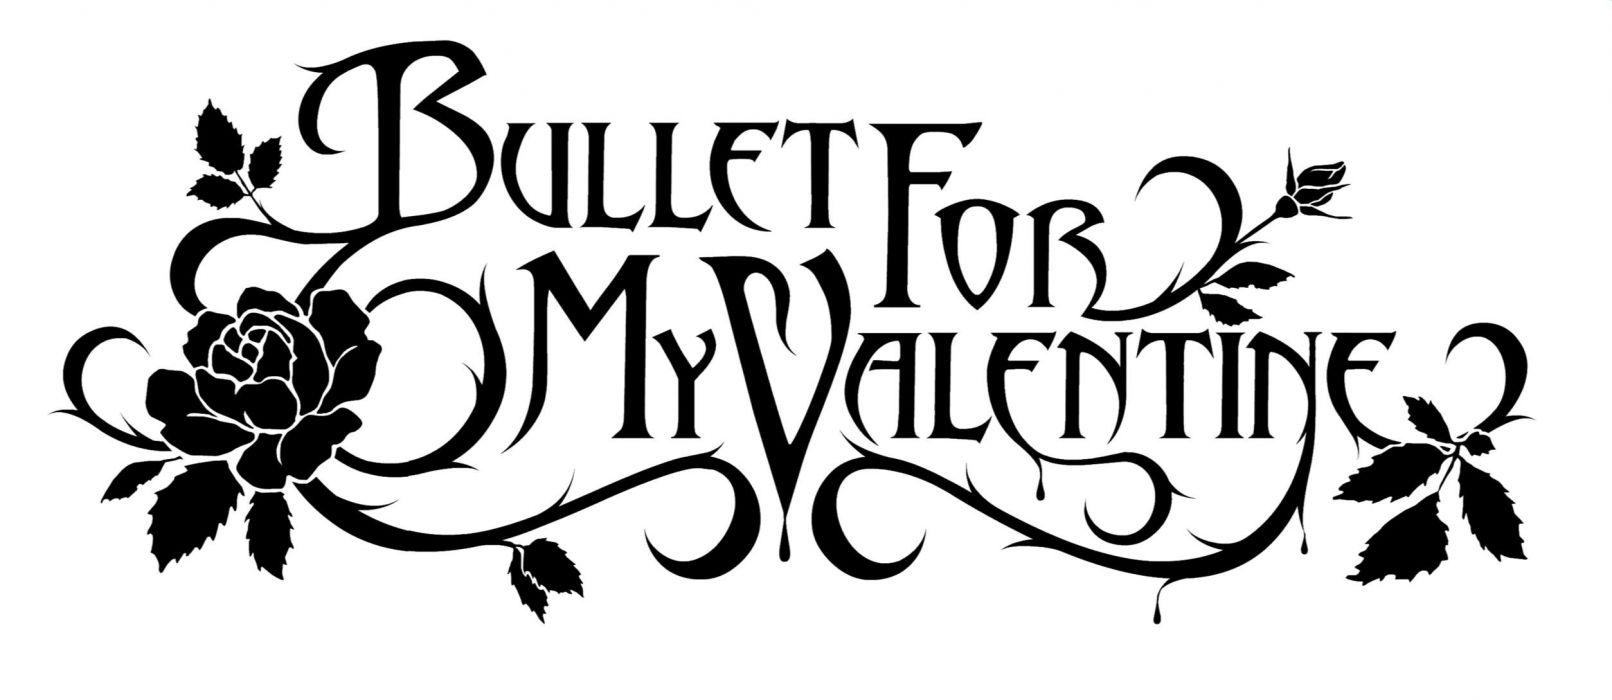 Bullet for My Valentine Logo - BULLET FOR MY VALENTINE heavy metal metalcore (41) wallpaper ...